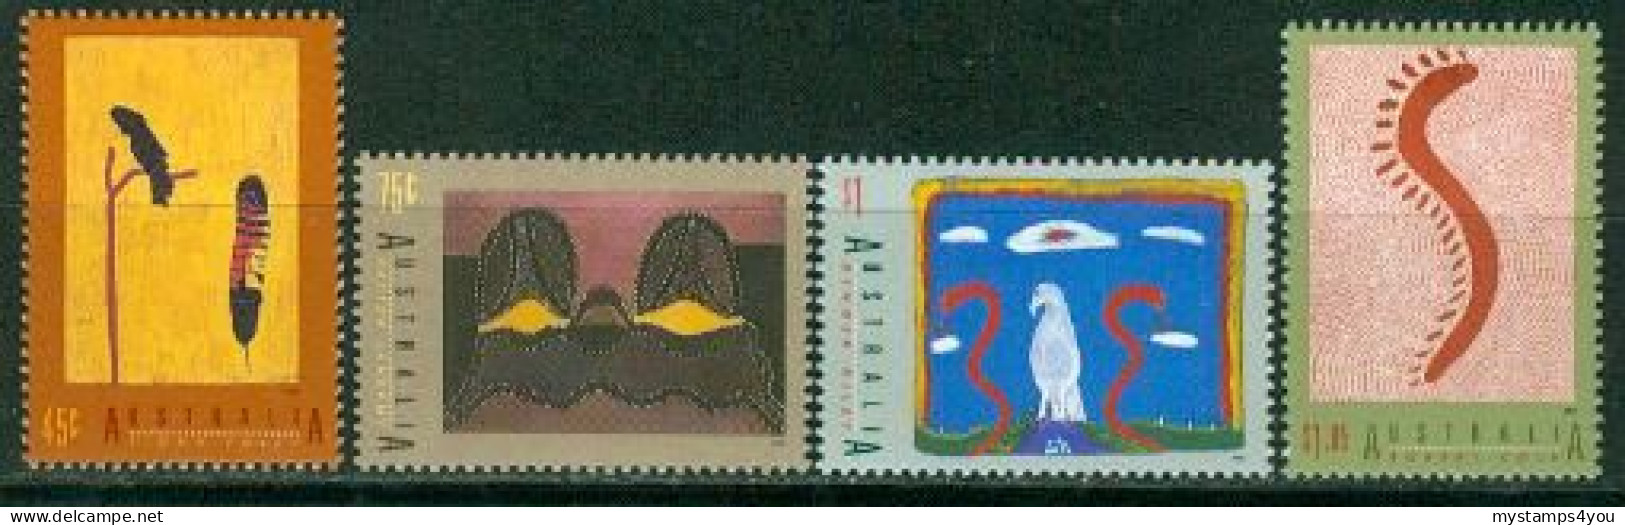 Bm Australia 1993 MiNr 1360-1363 MNH | International Year Of Indigenous Peoples. Aboriginal Art #kar-1001a - Mint Stamps